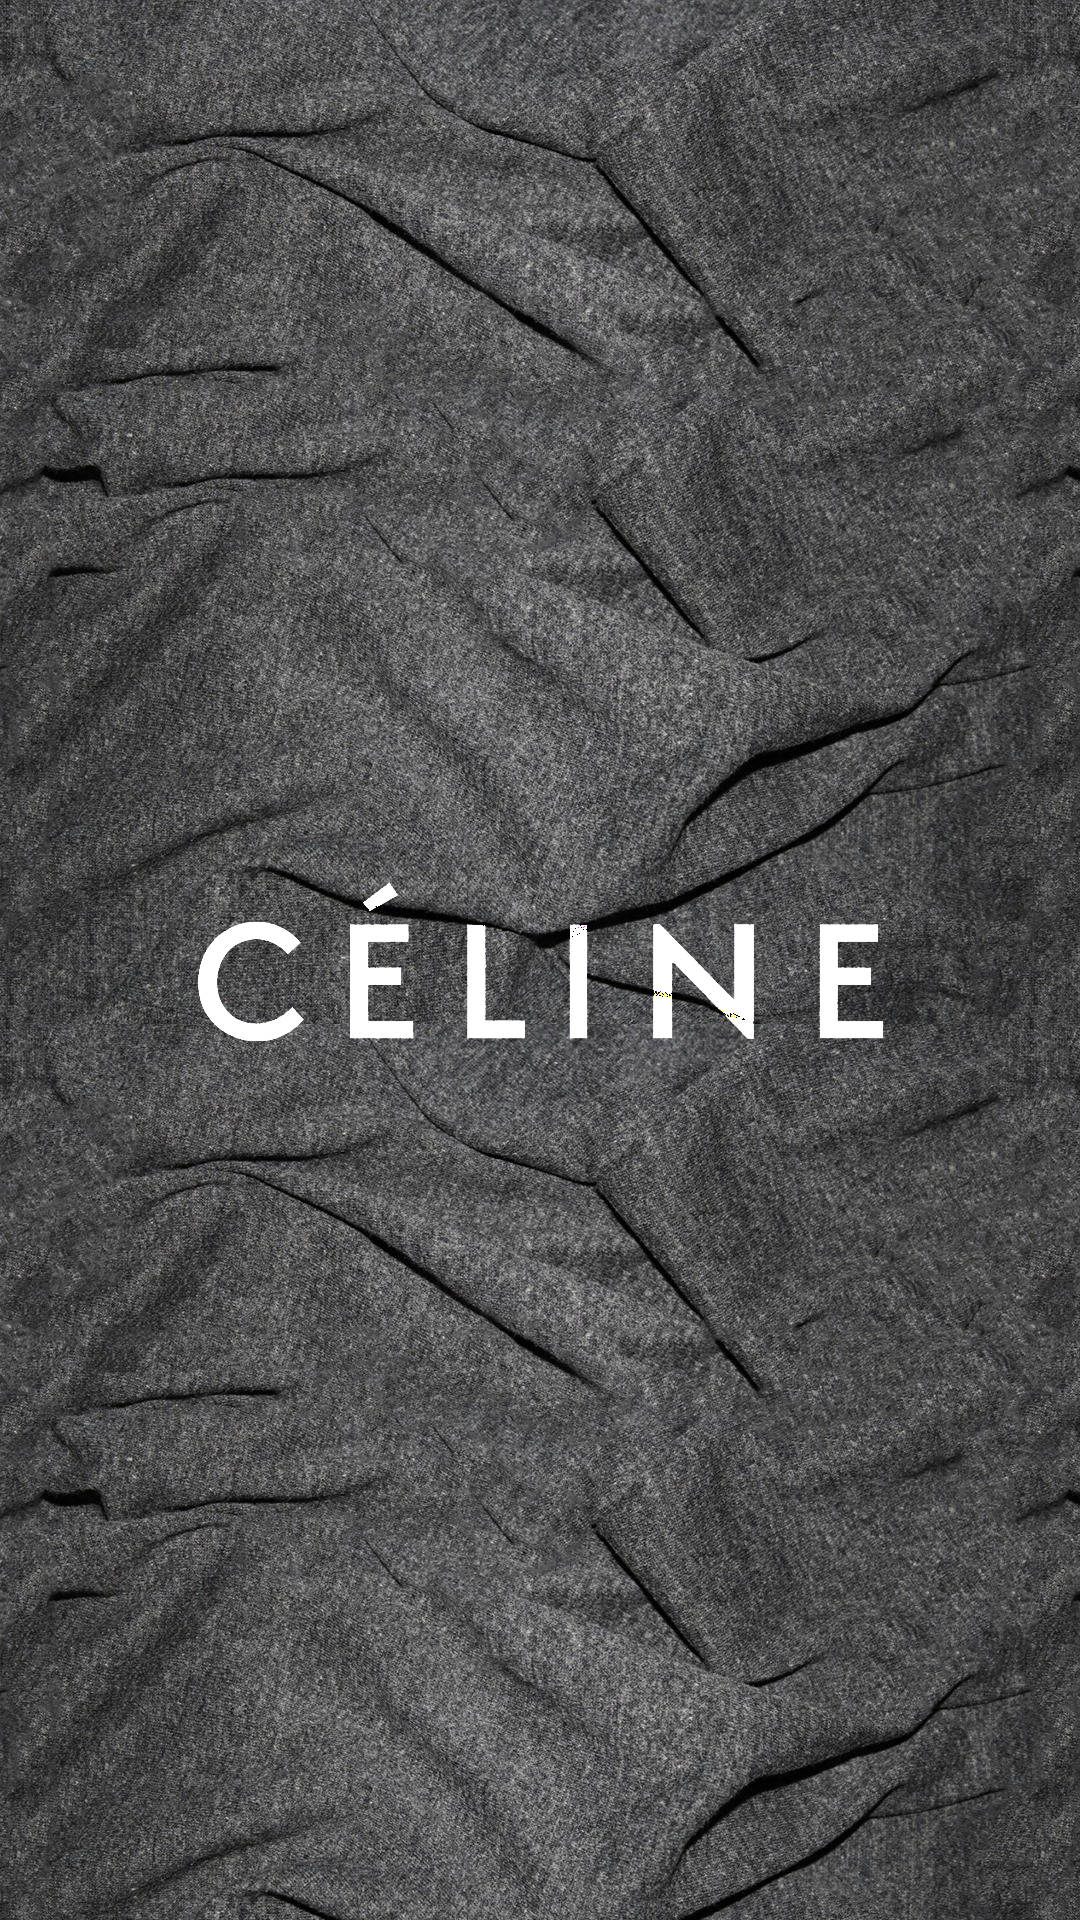 Celine Wallpaper